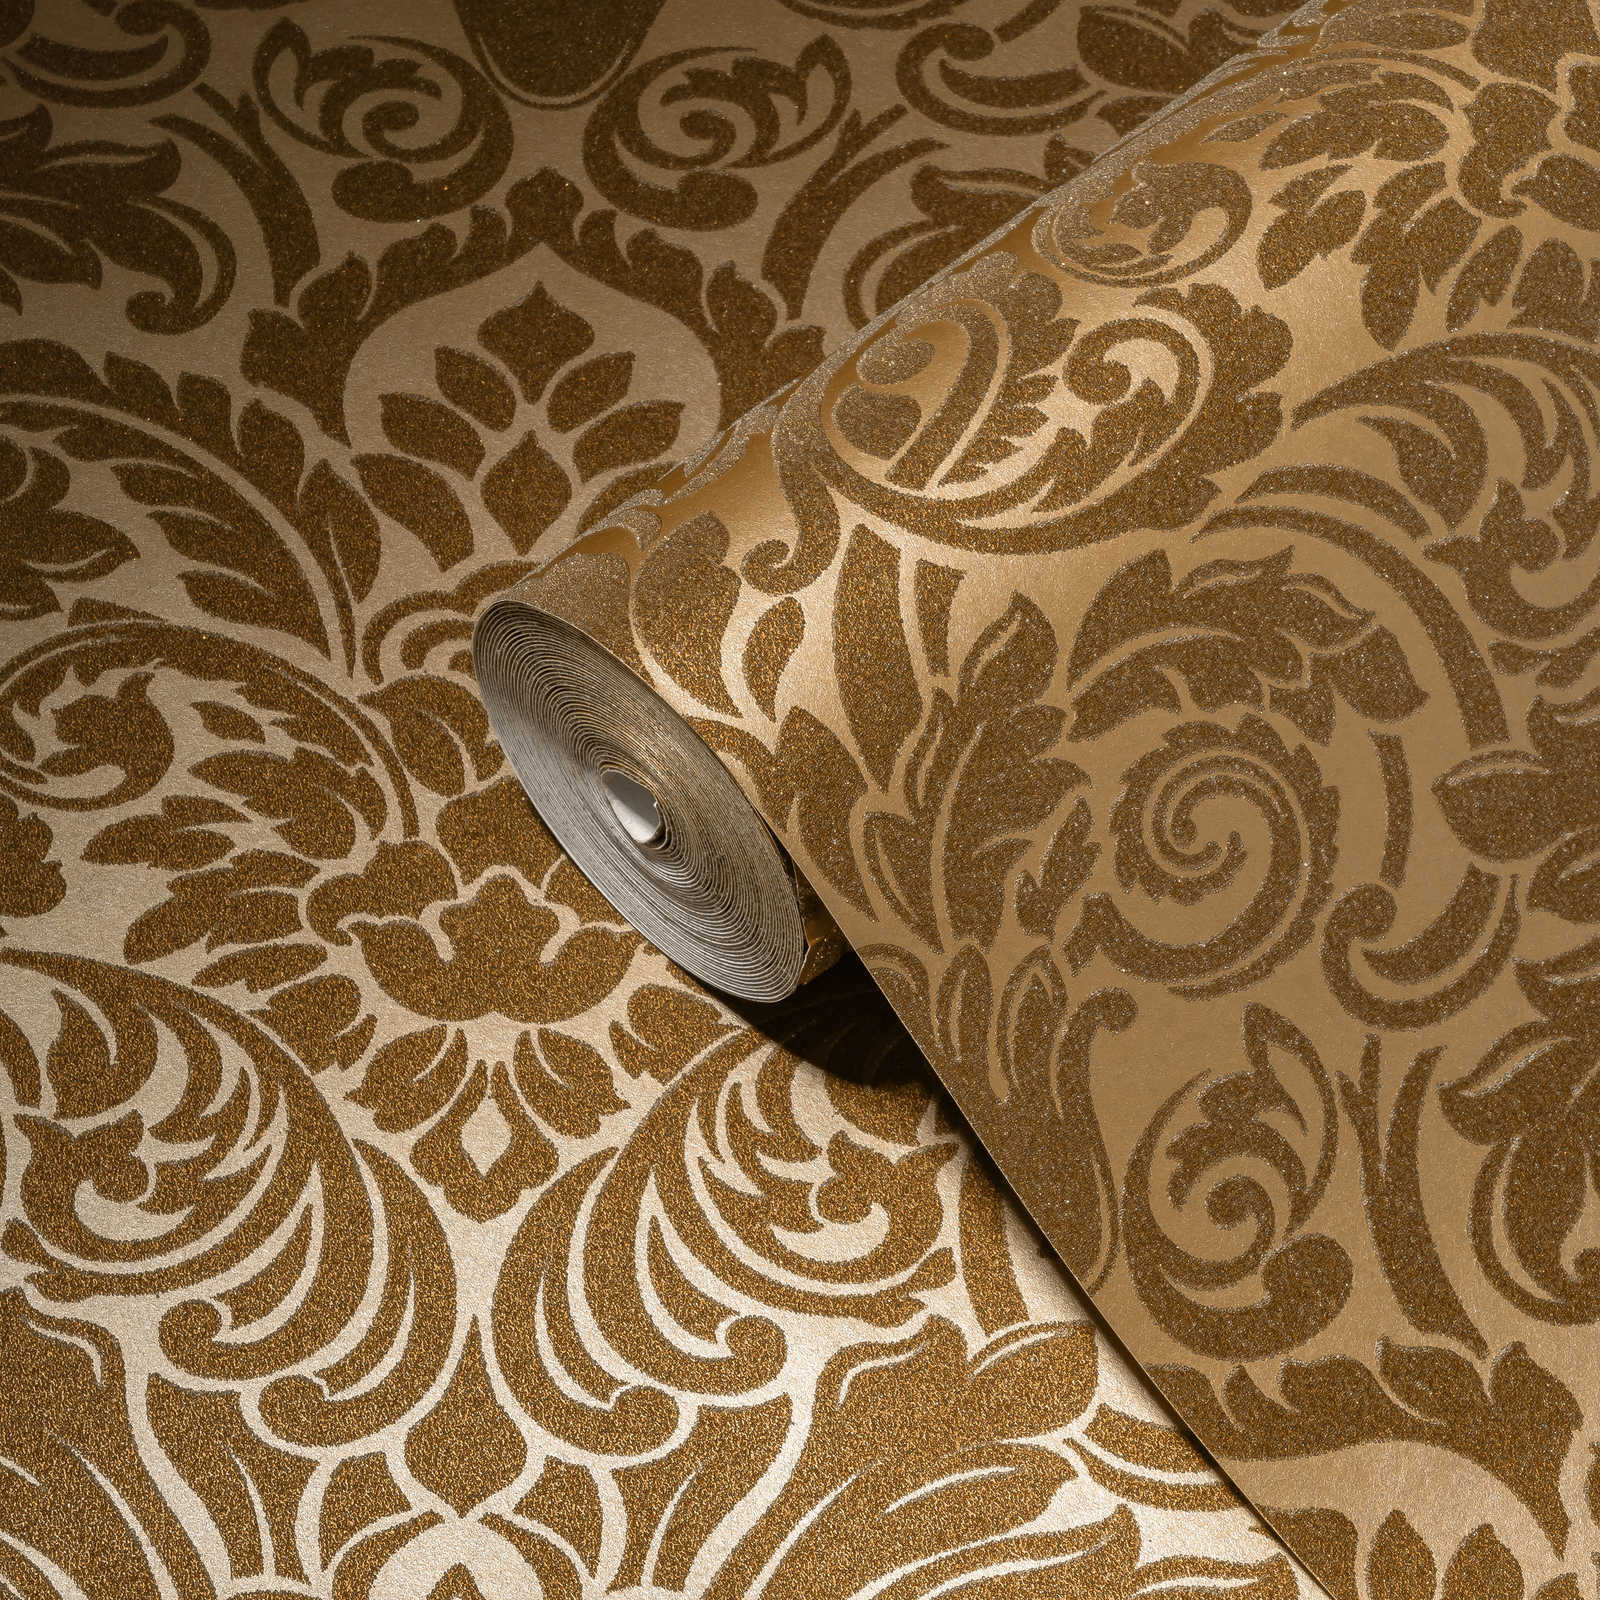             Ornament wallpaper metallic effect & floral design - gold
        